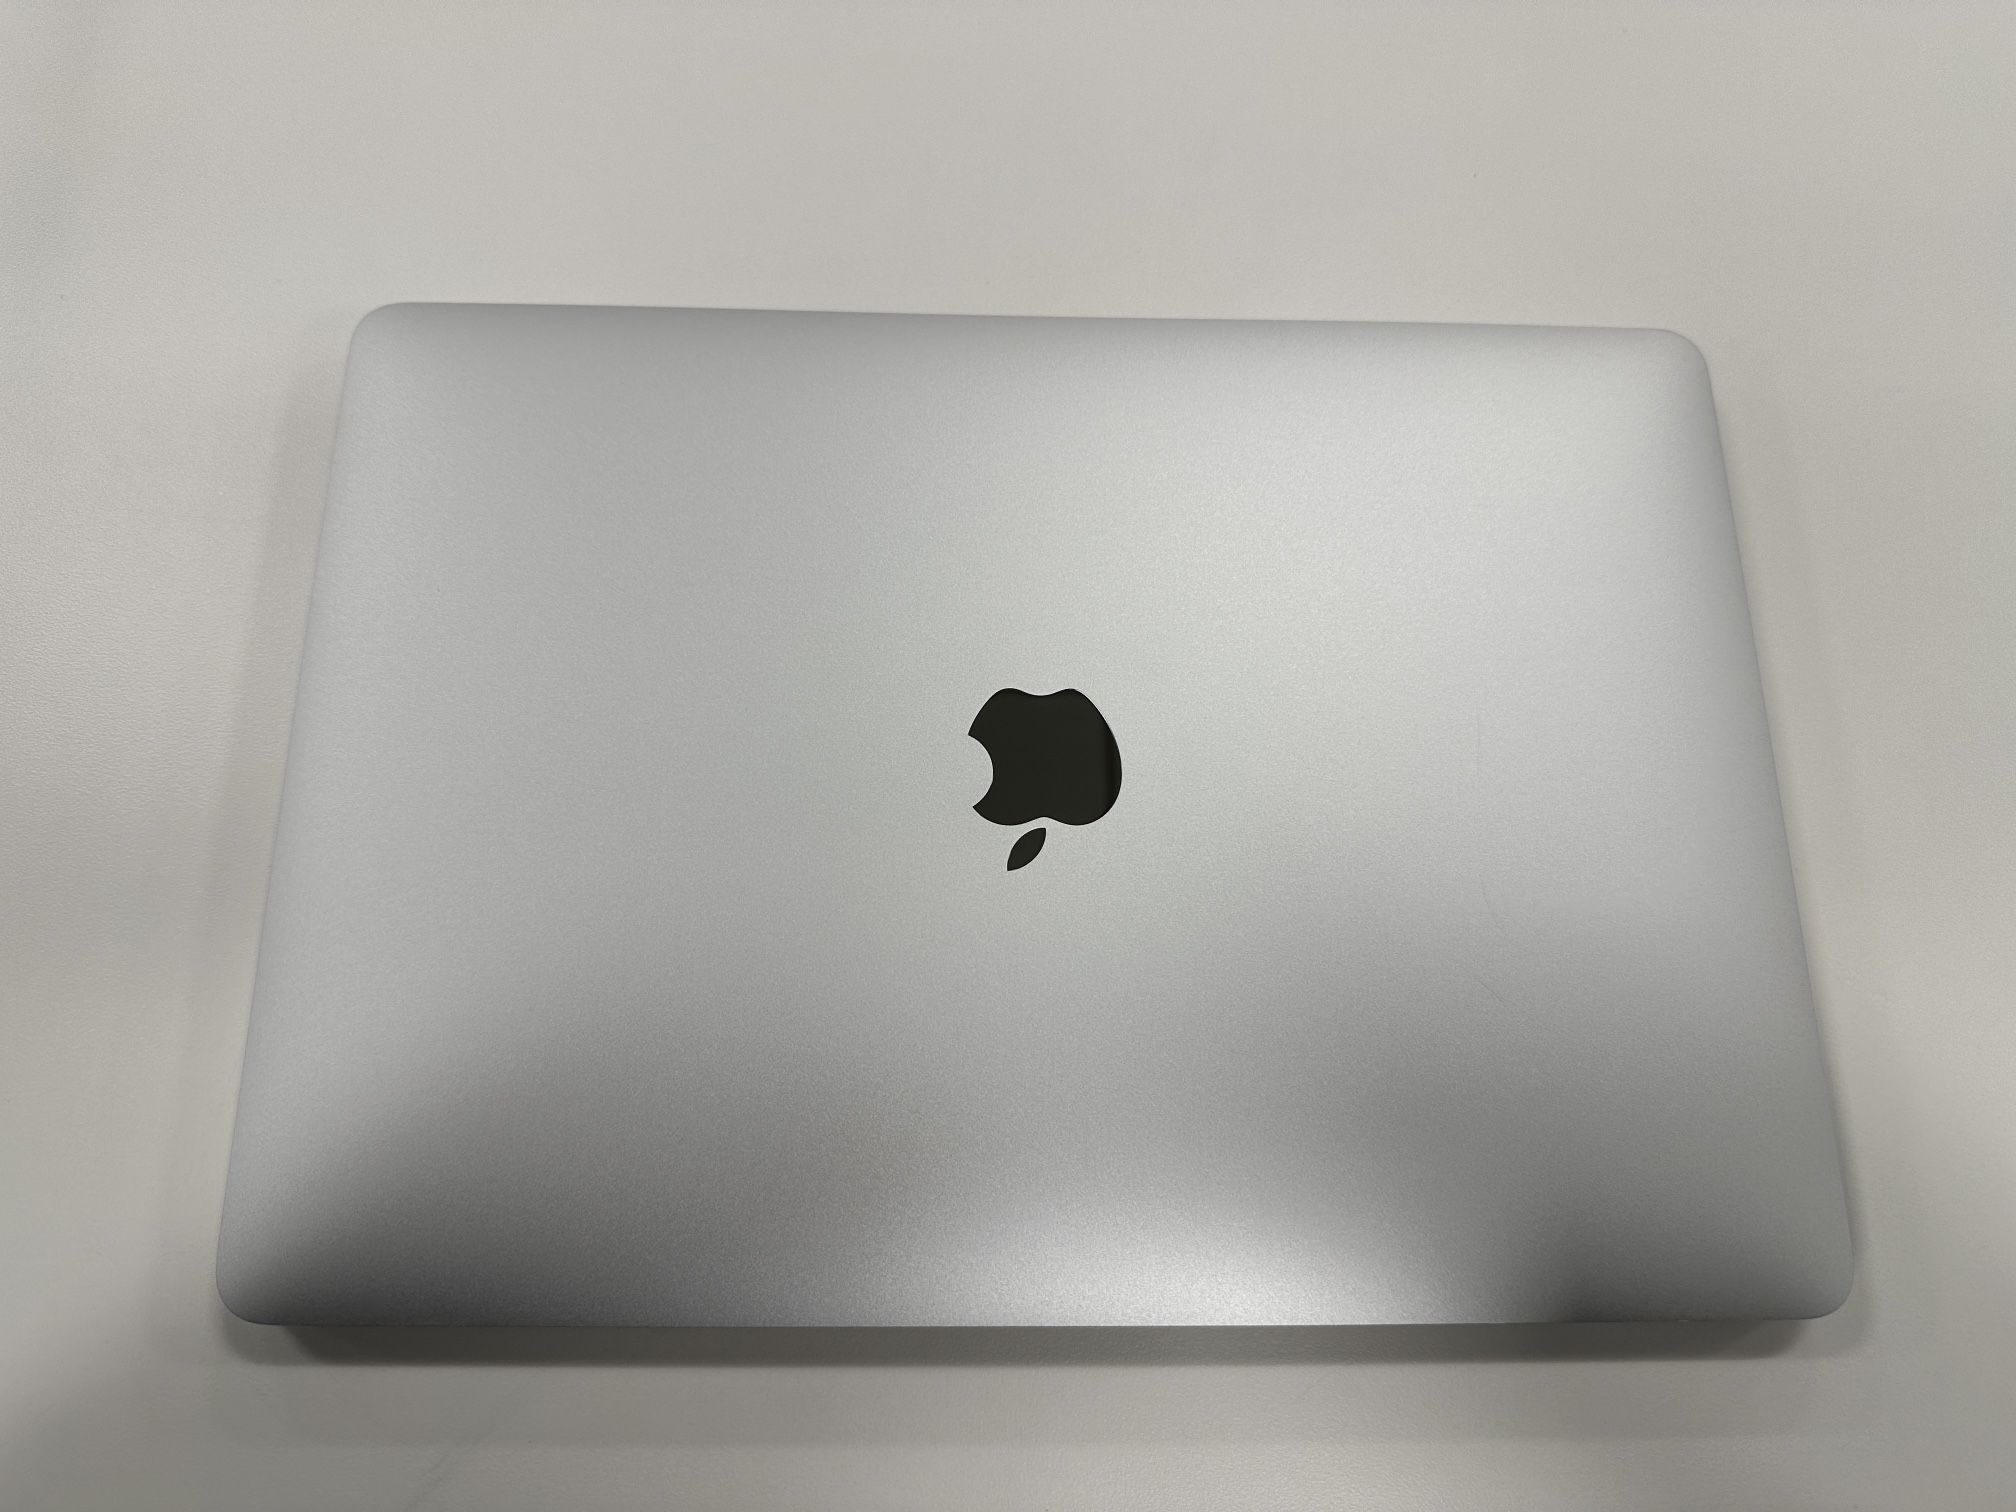 MacBook Pro Retina 13.3-inch (2020) - Core i5 - 16GB - SSD 256GB